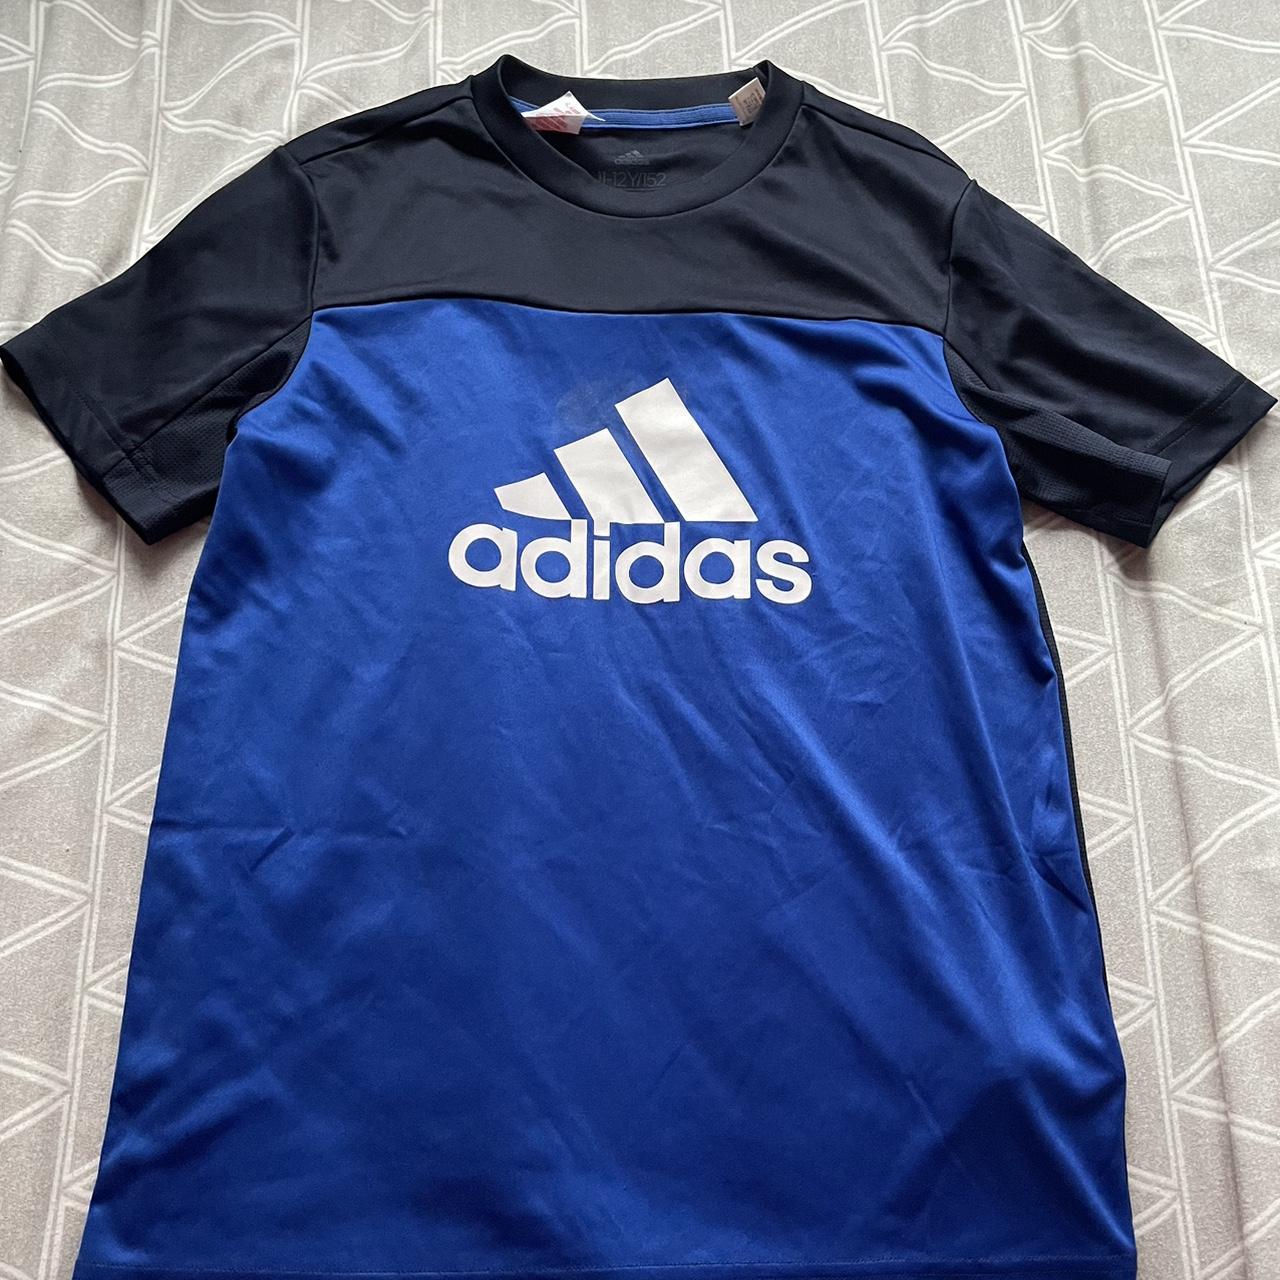 Adidas Black and Blue T-shirt | Depop